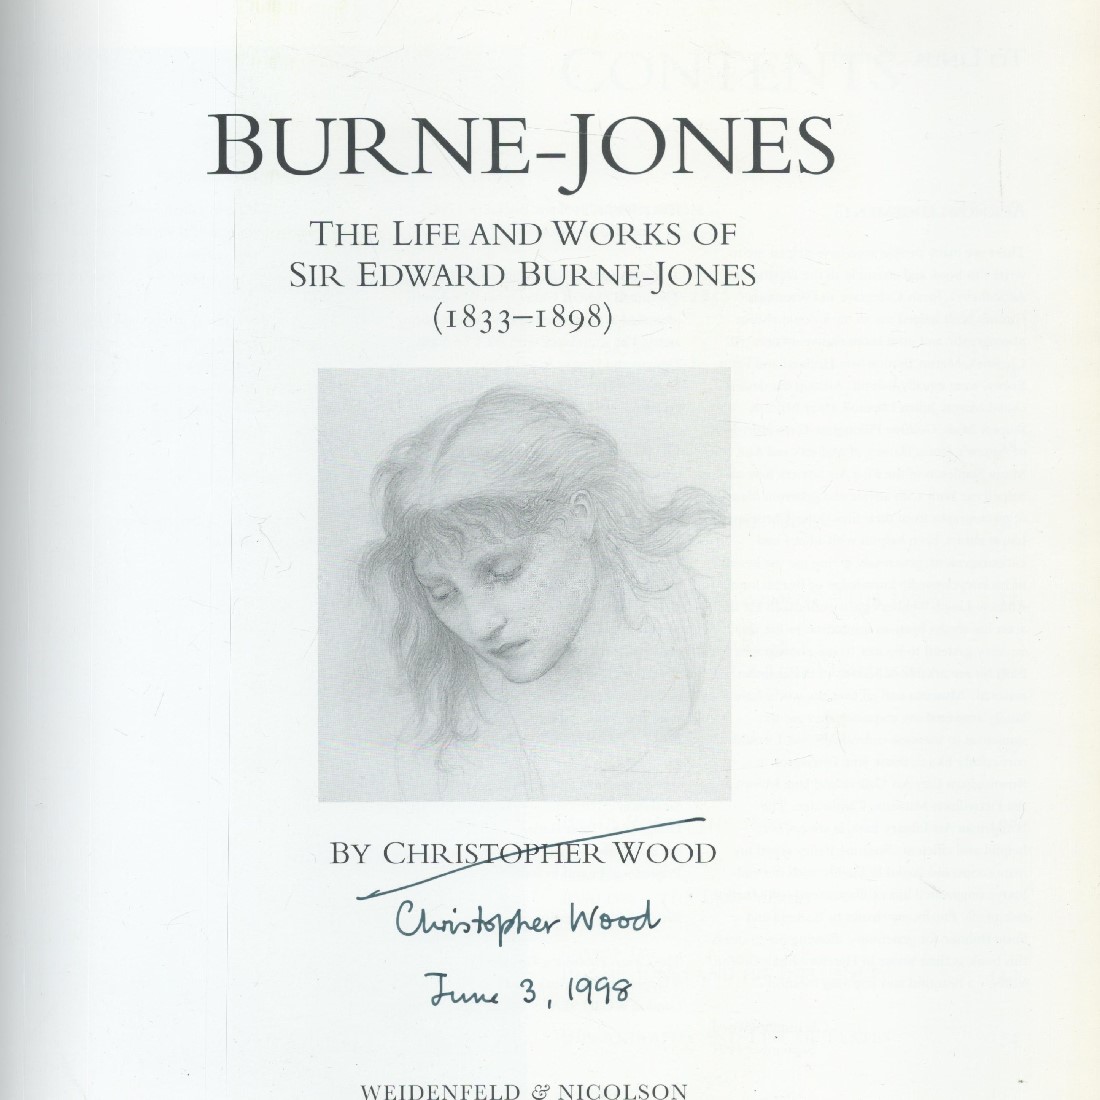 Christopher Wood Signed Book - Burne-Jones - The Life and Works of Sir Edward Burne-Jones (1833 - - Image 2 of 3